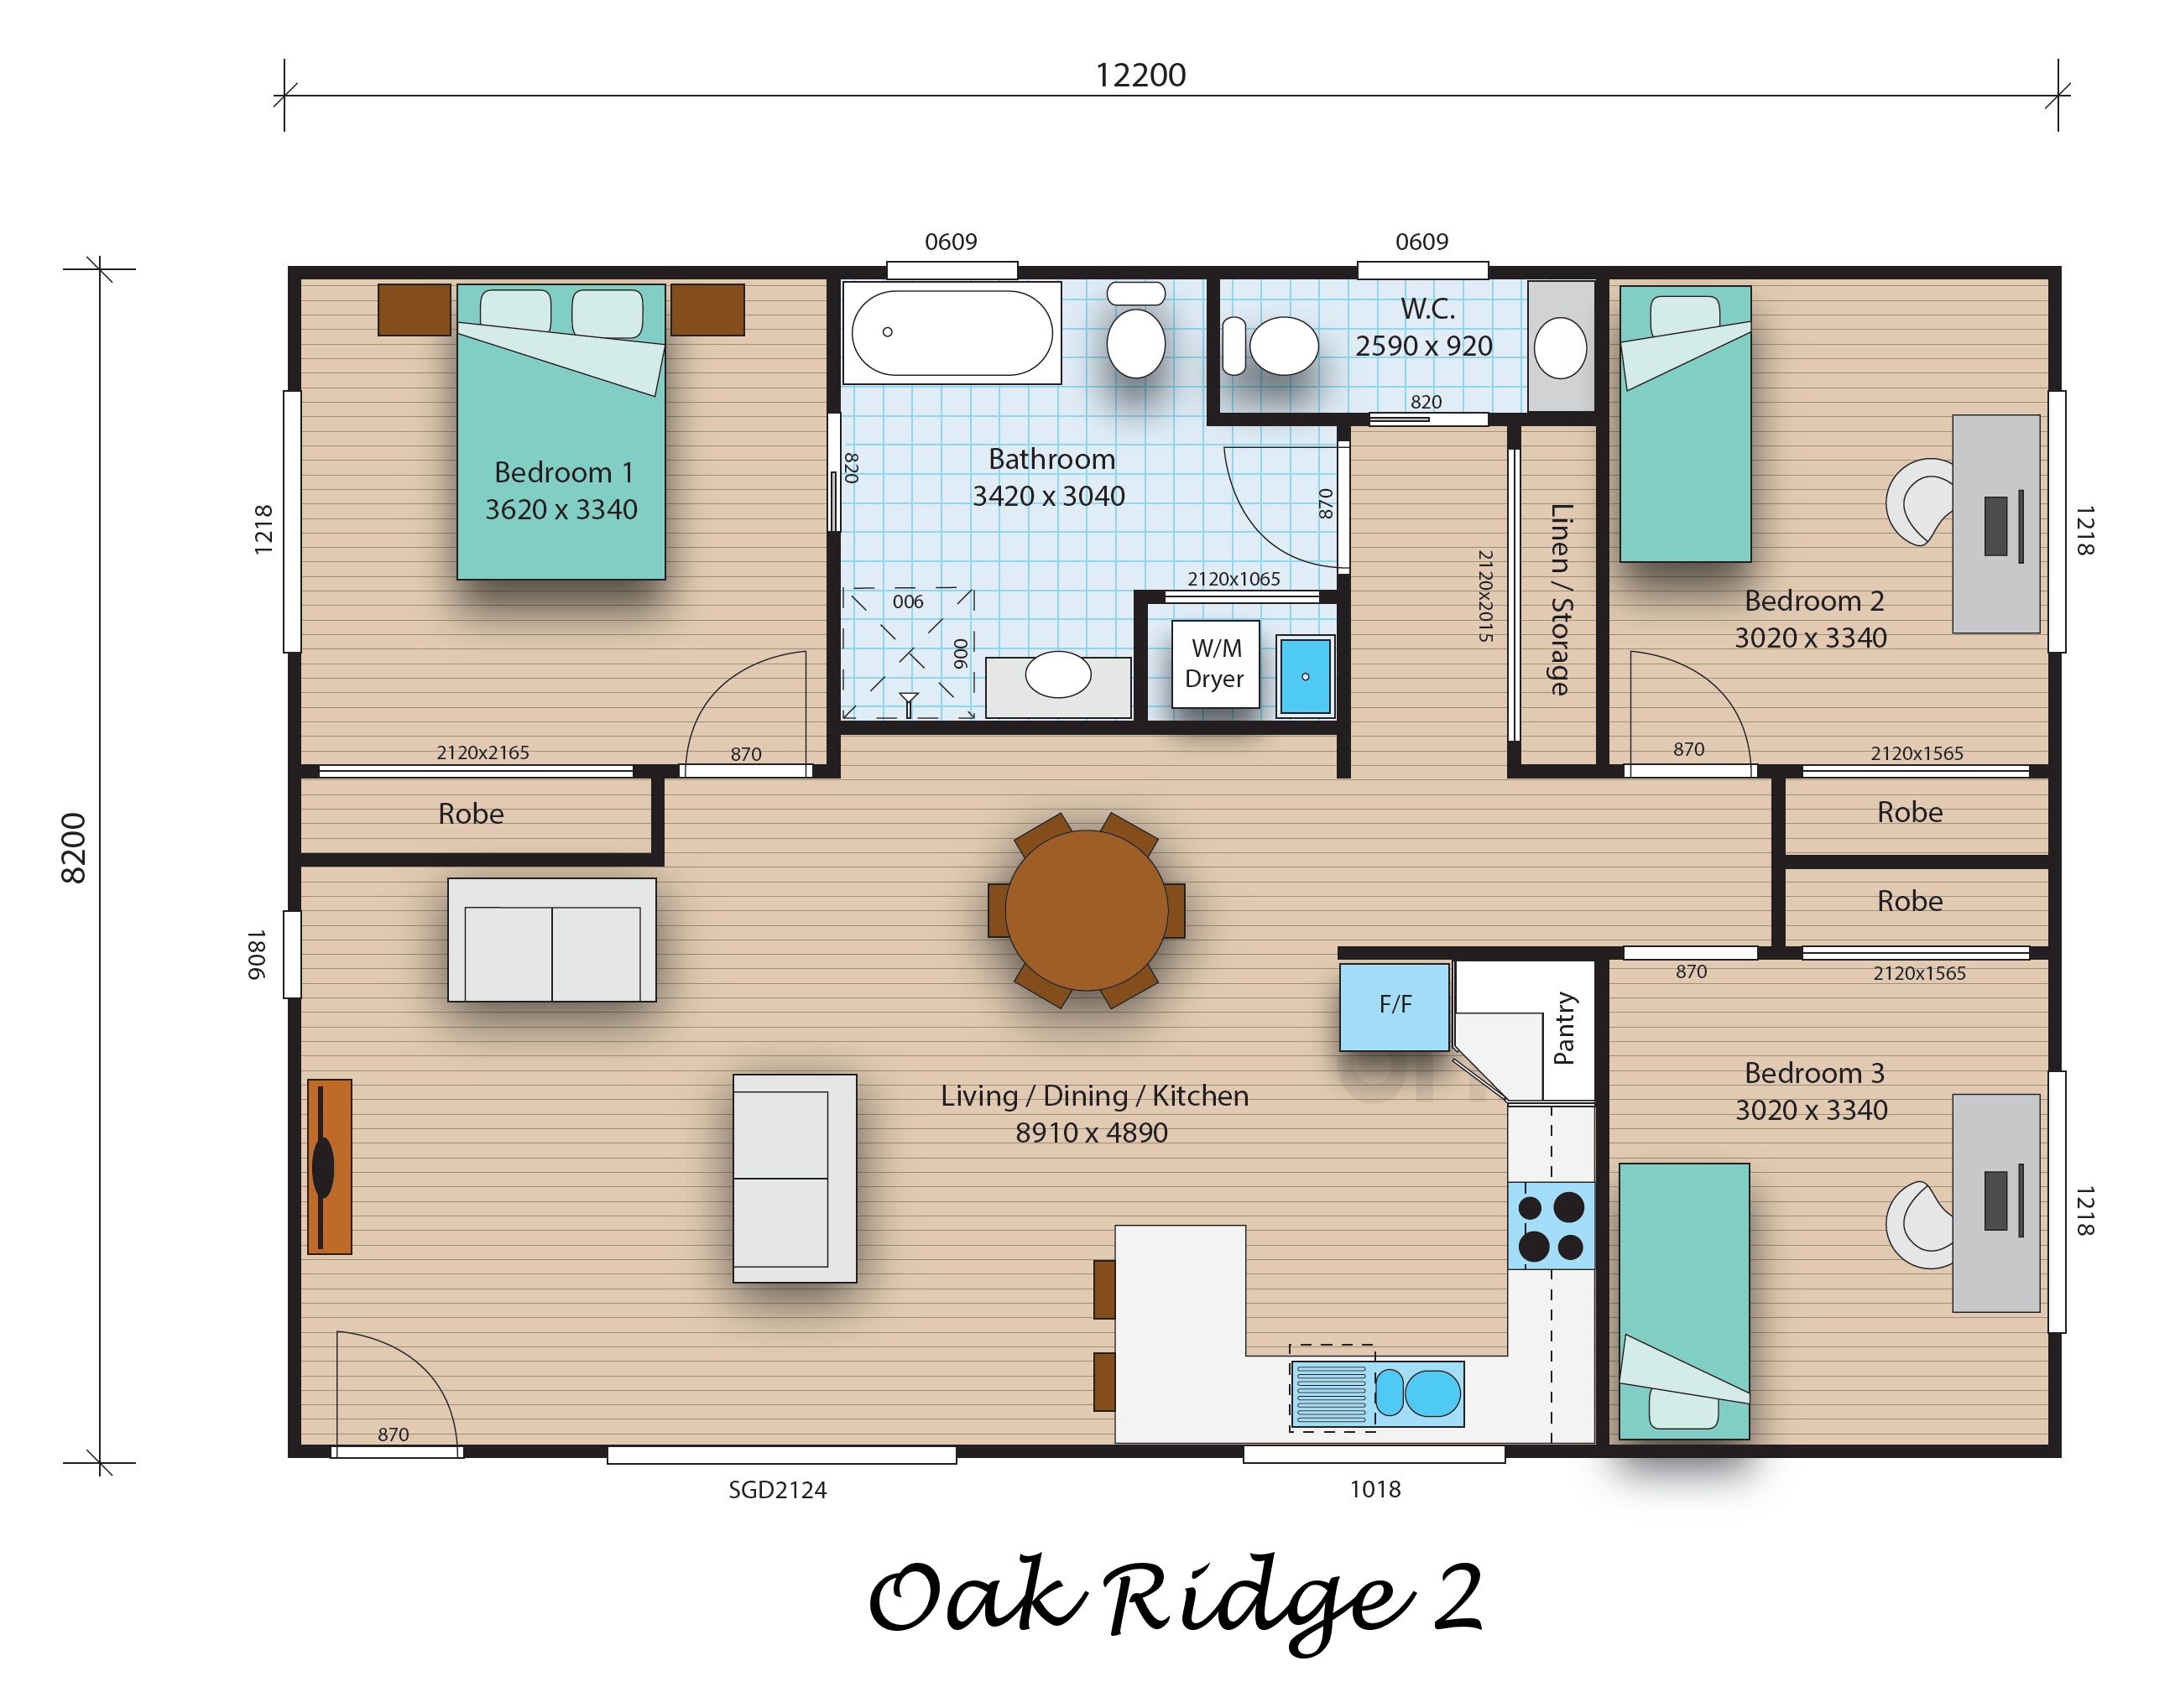 Oak Ridge 2 floorplan image